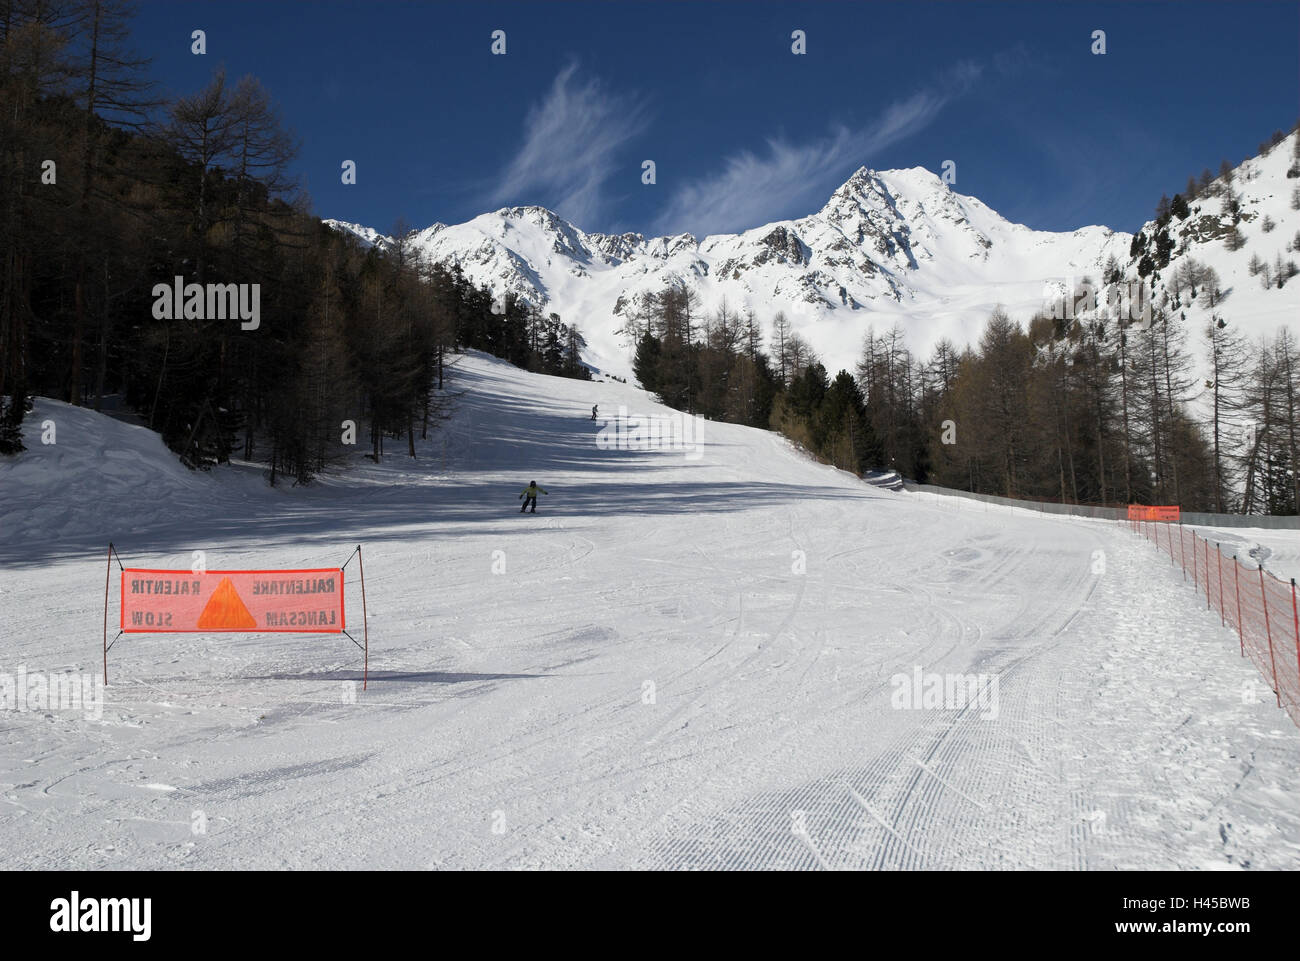 Ski runway, departure, danger sign, Stock Photo